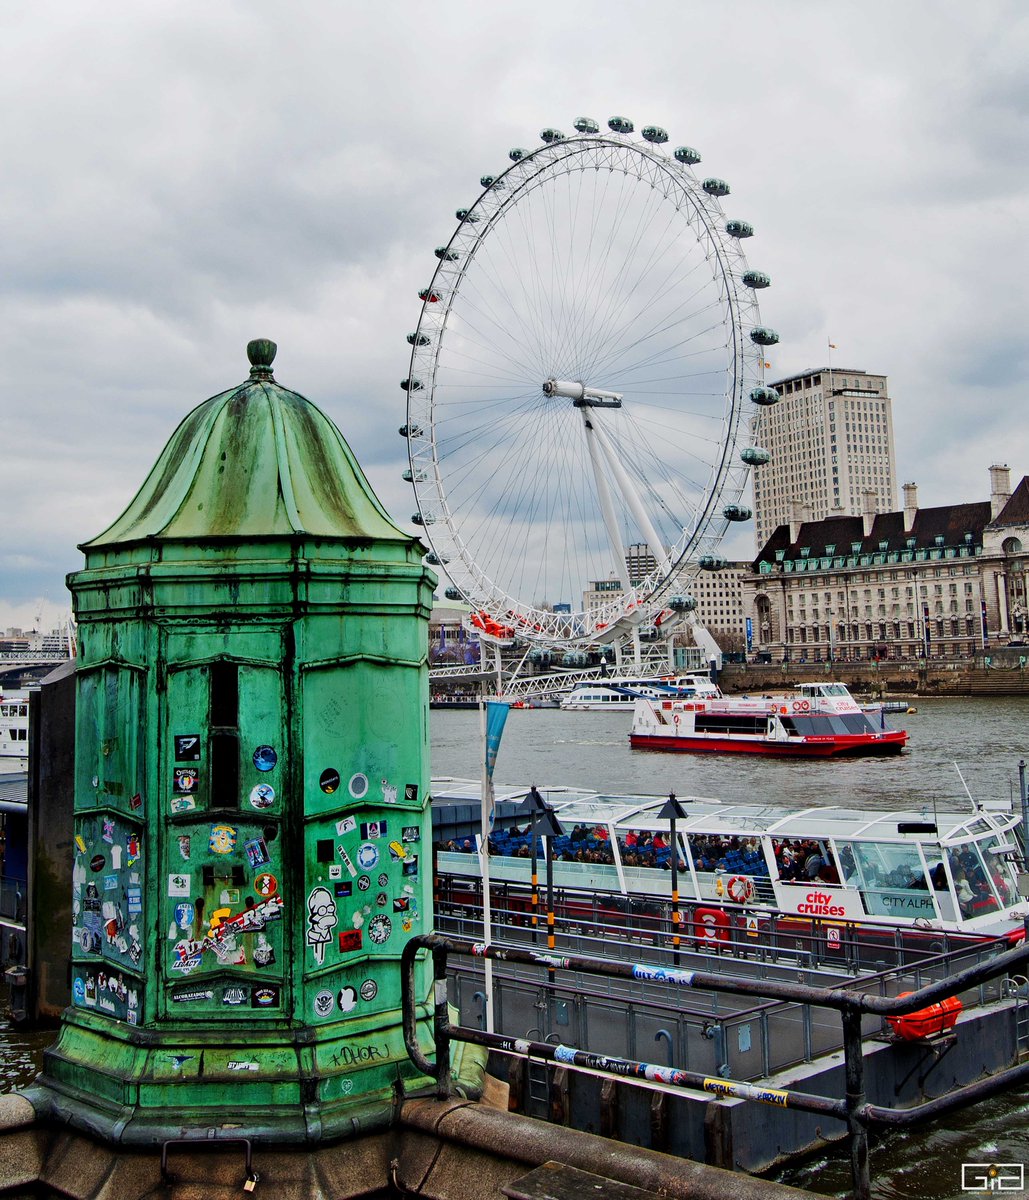 .@TheLondonEye London Eye @VisitBritain @Londonist @TimeOutLondon @LondONtheinside @visitlondon